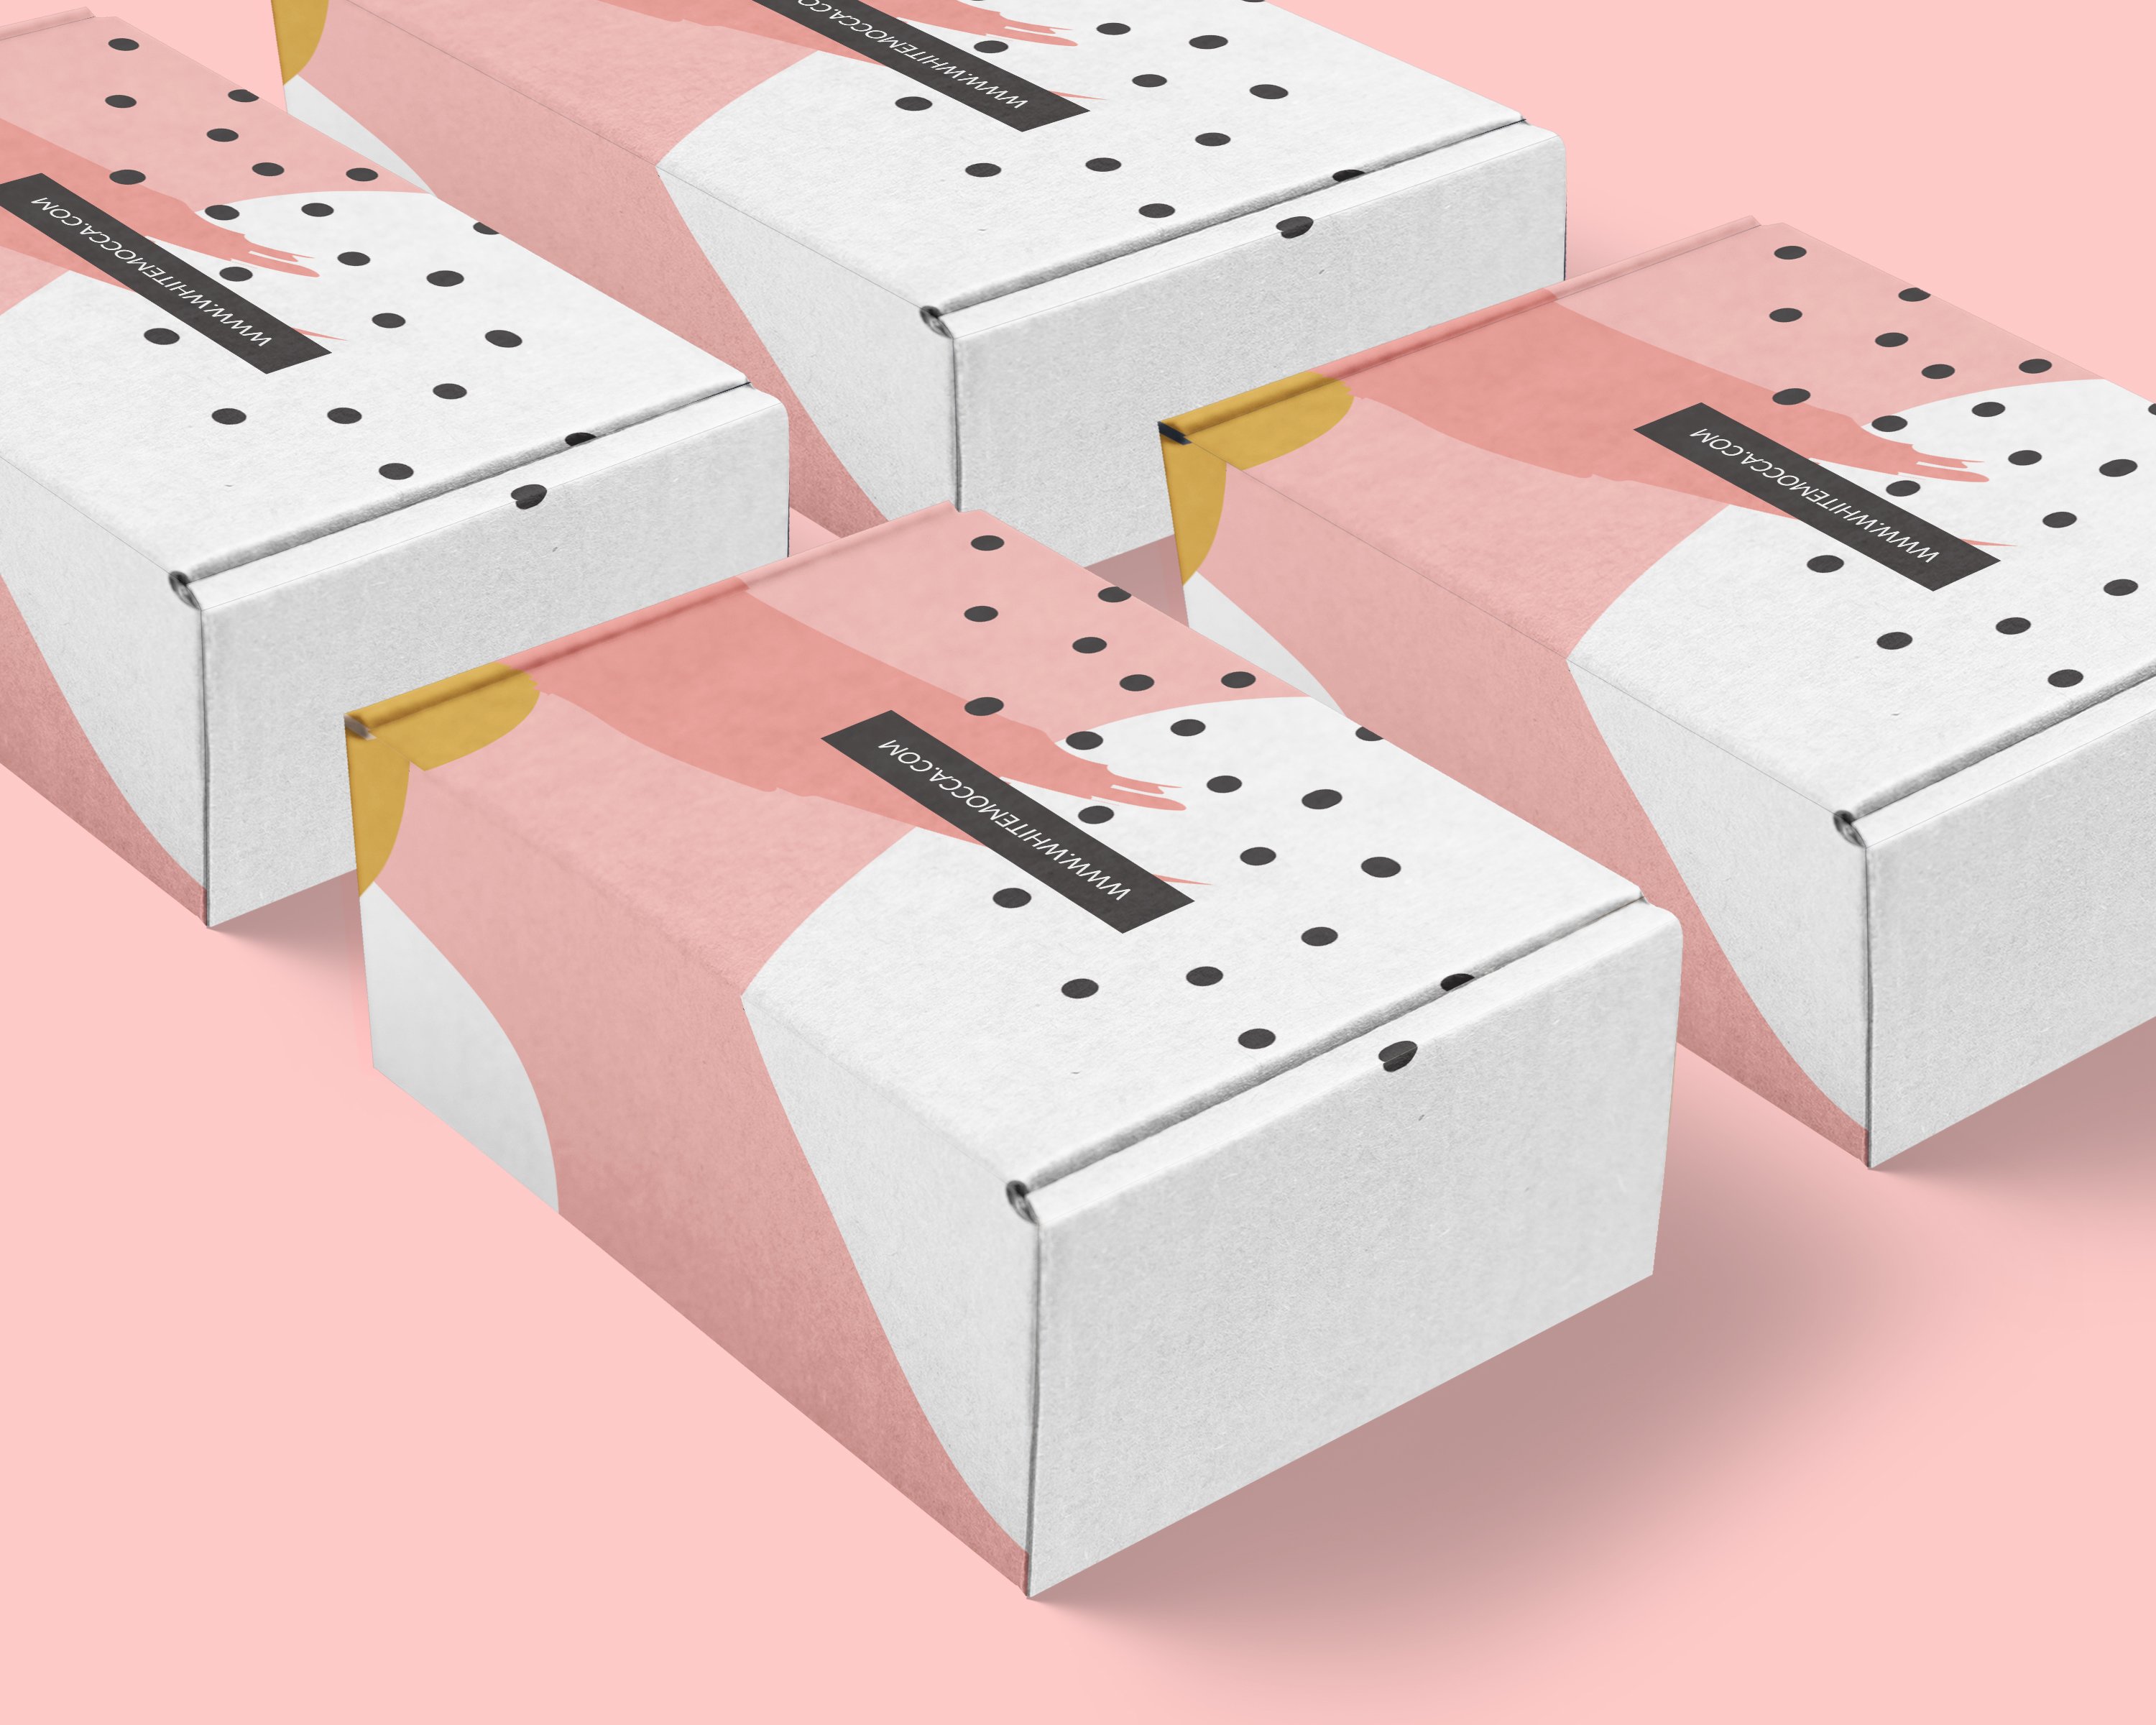 15款产品礼品包装纸盒设计展示贴图样机15xmailingboxesmockups